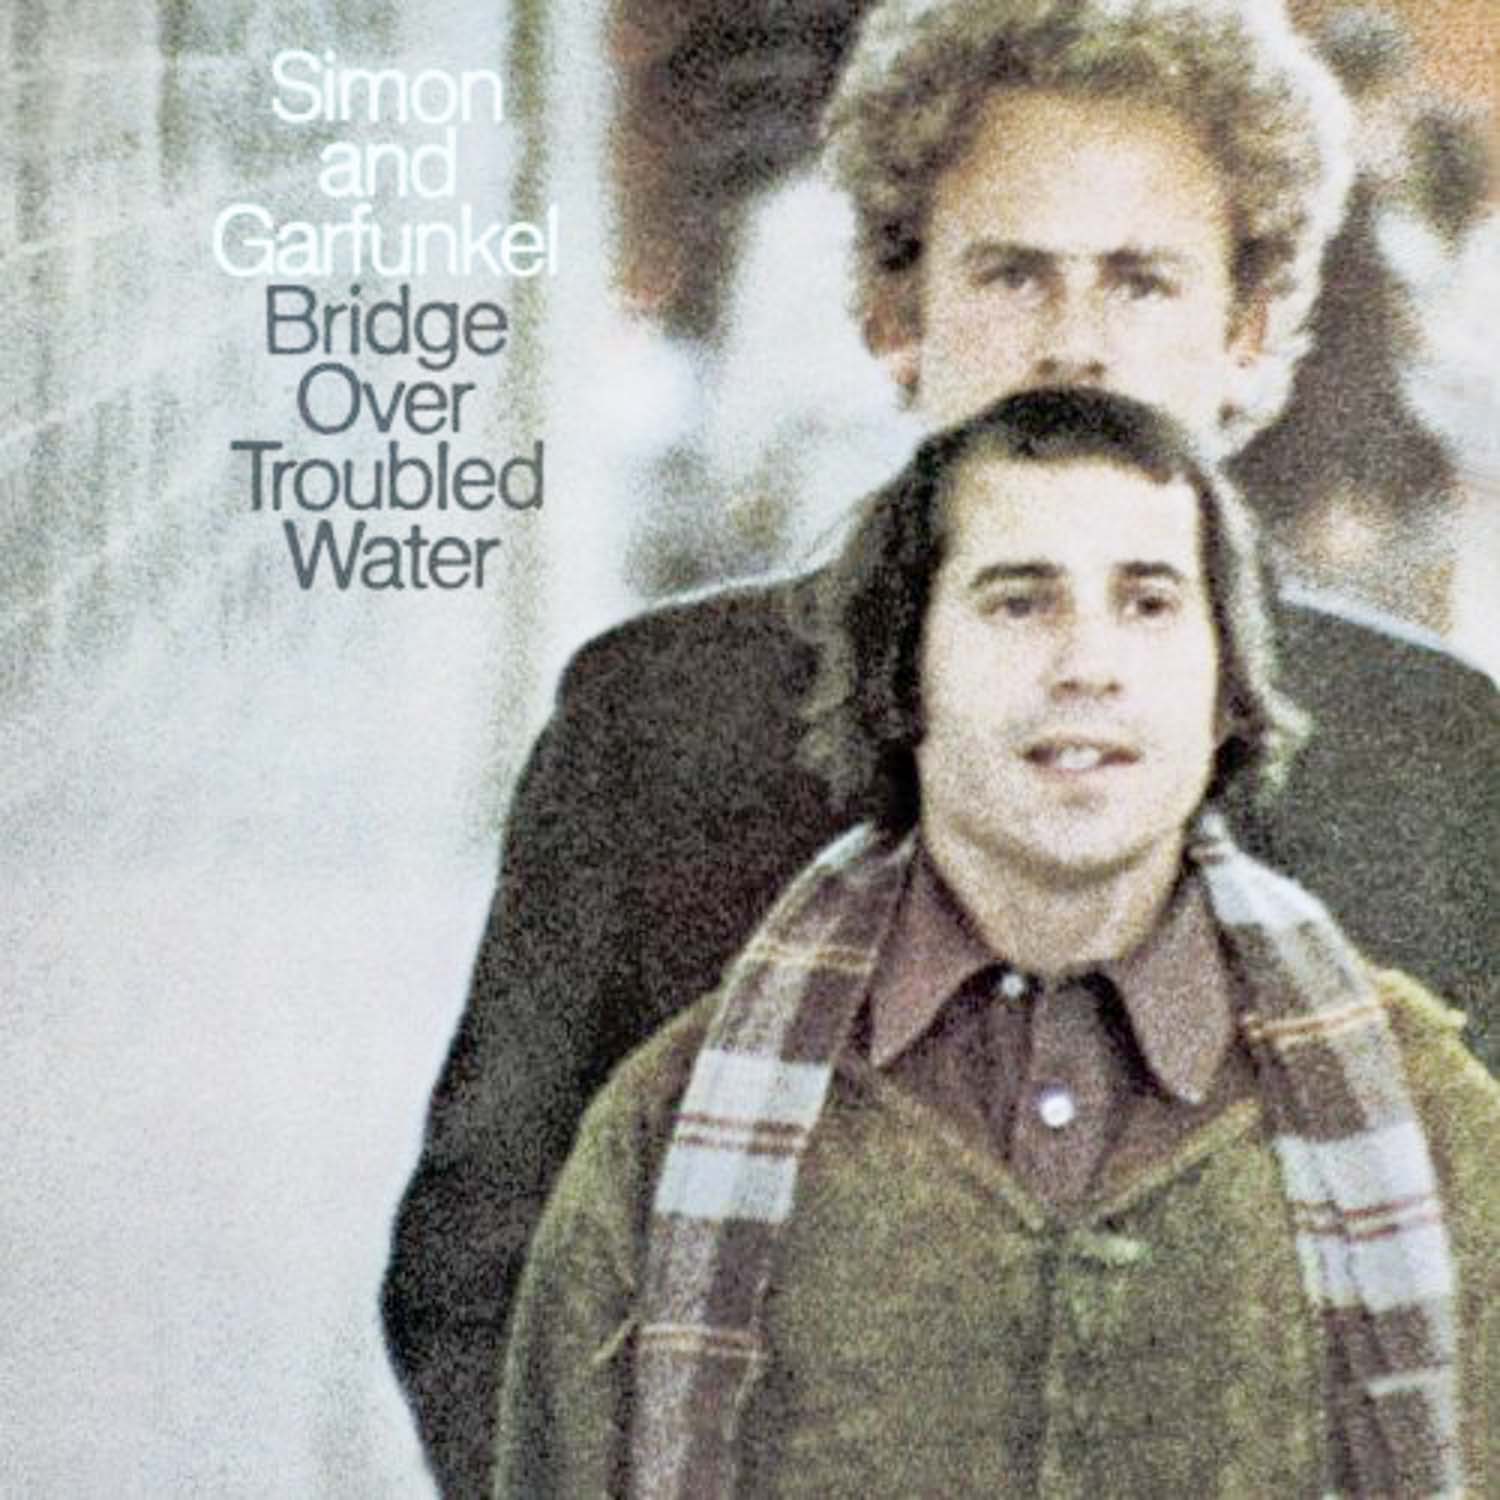 Simon and Garfunkel  Bridge Over Troubled Water (S 63699)  *LP 12'' (Vinyl)*. 